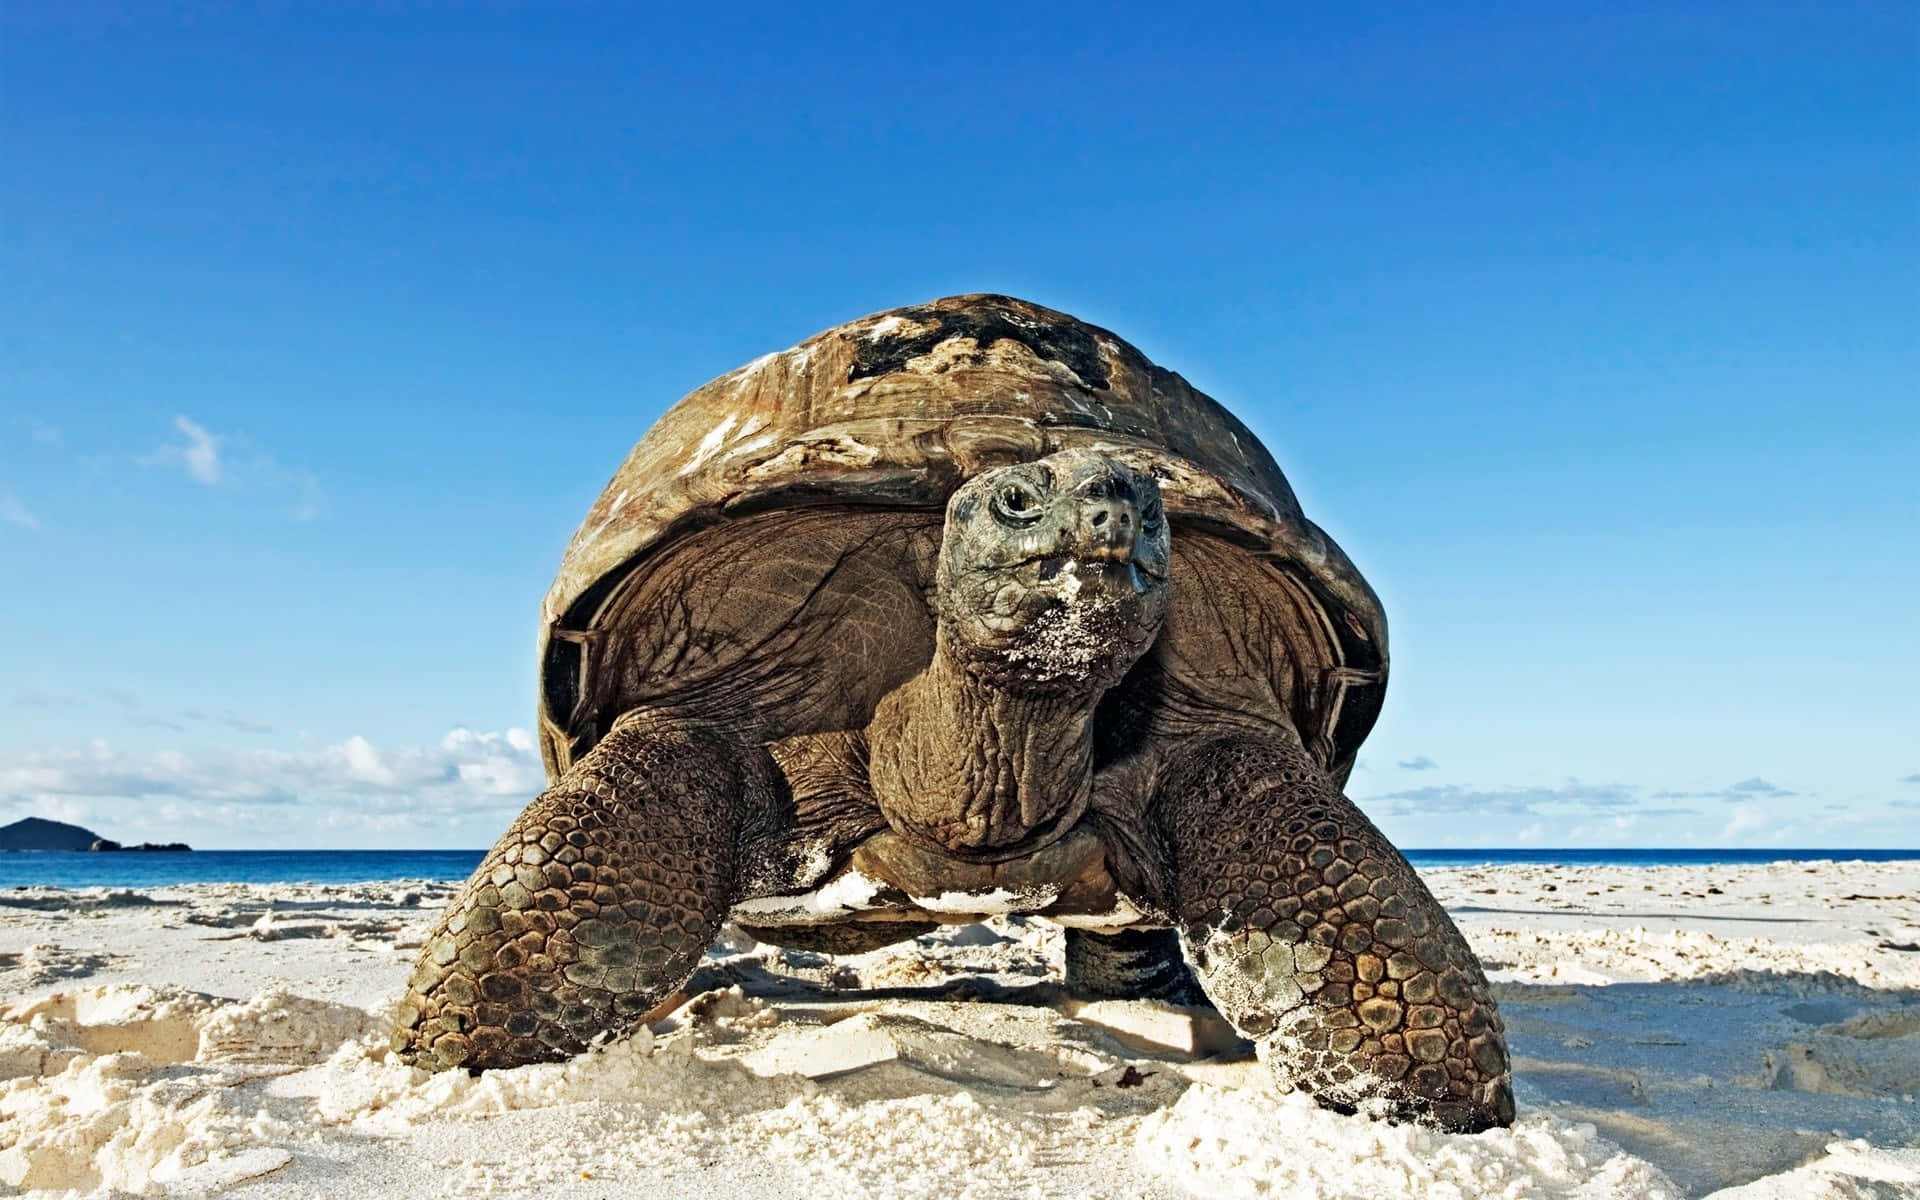 Stunning Sea Turtle Swimming in the Ocean Depths